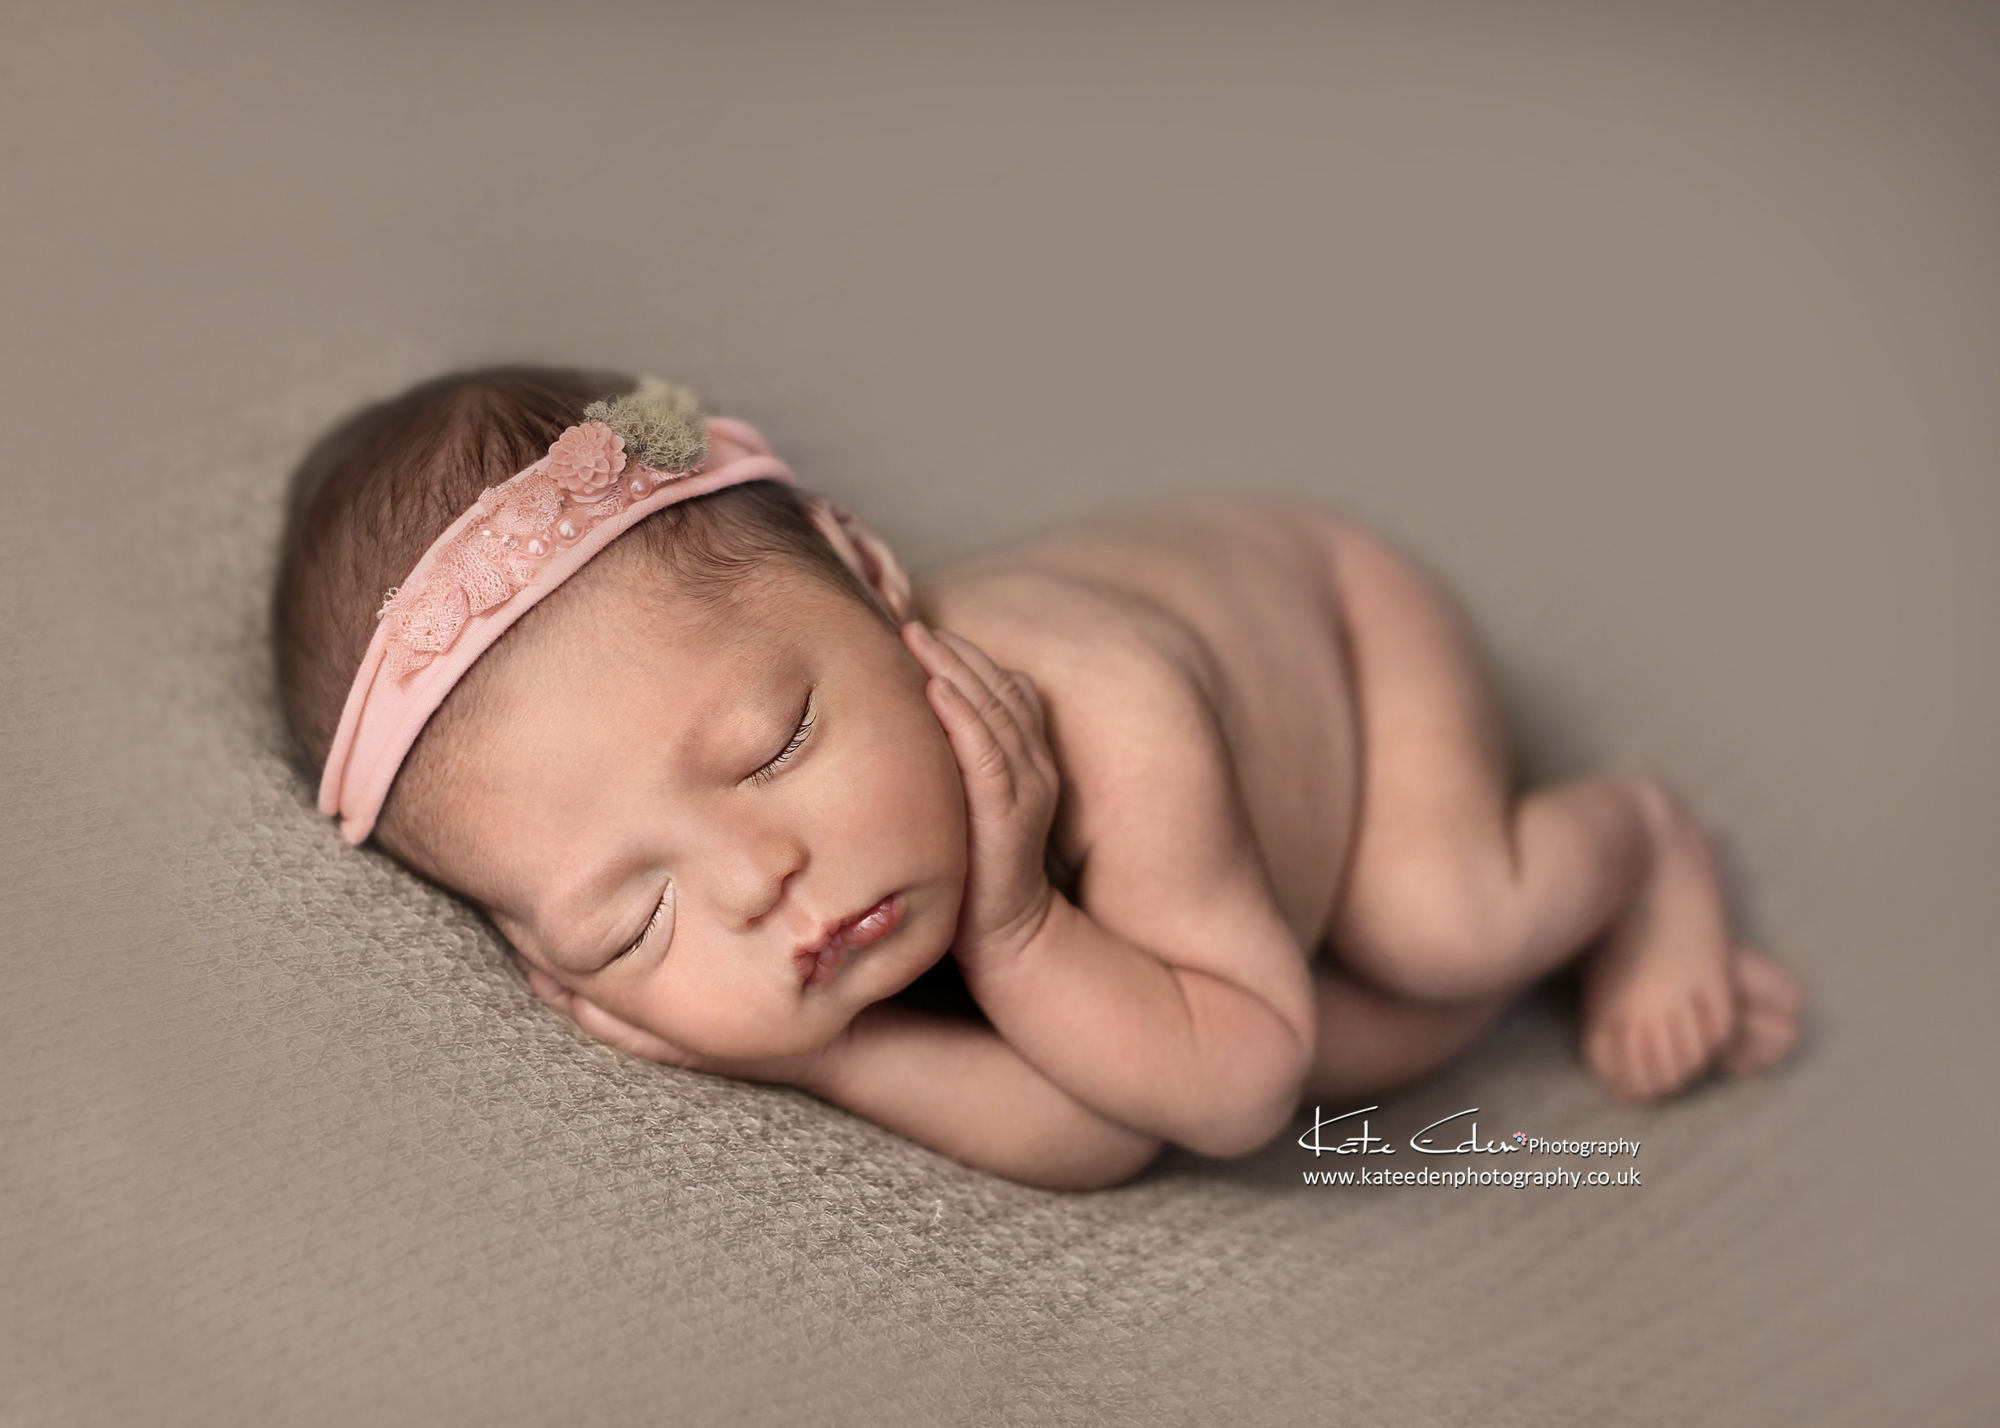 A lovely newborn baby girl - Kate Eden Photography - Milton Keynes newborn photographer